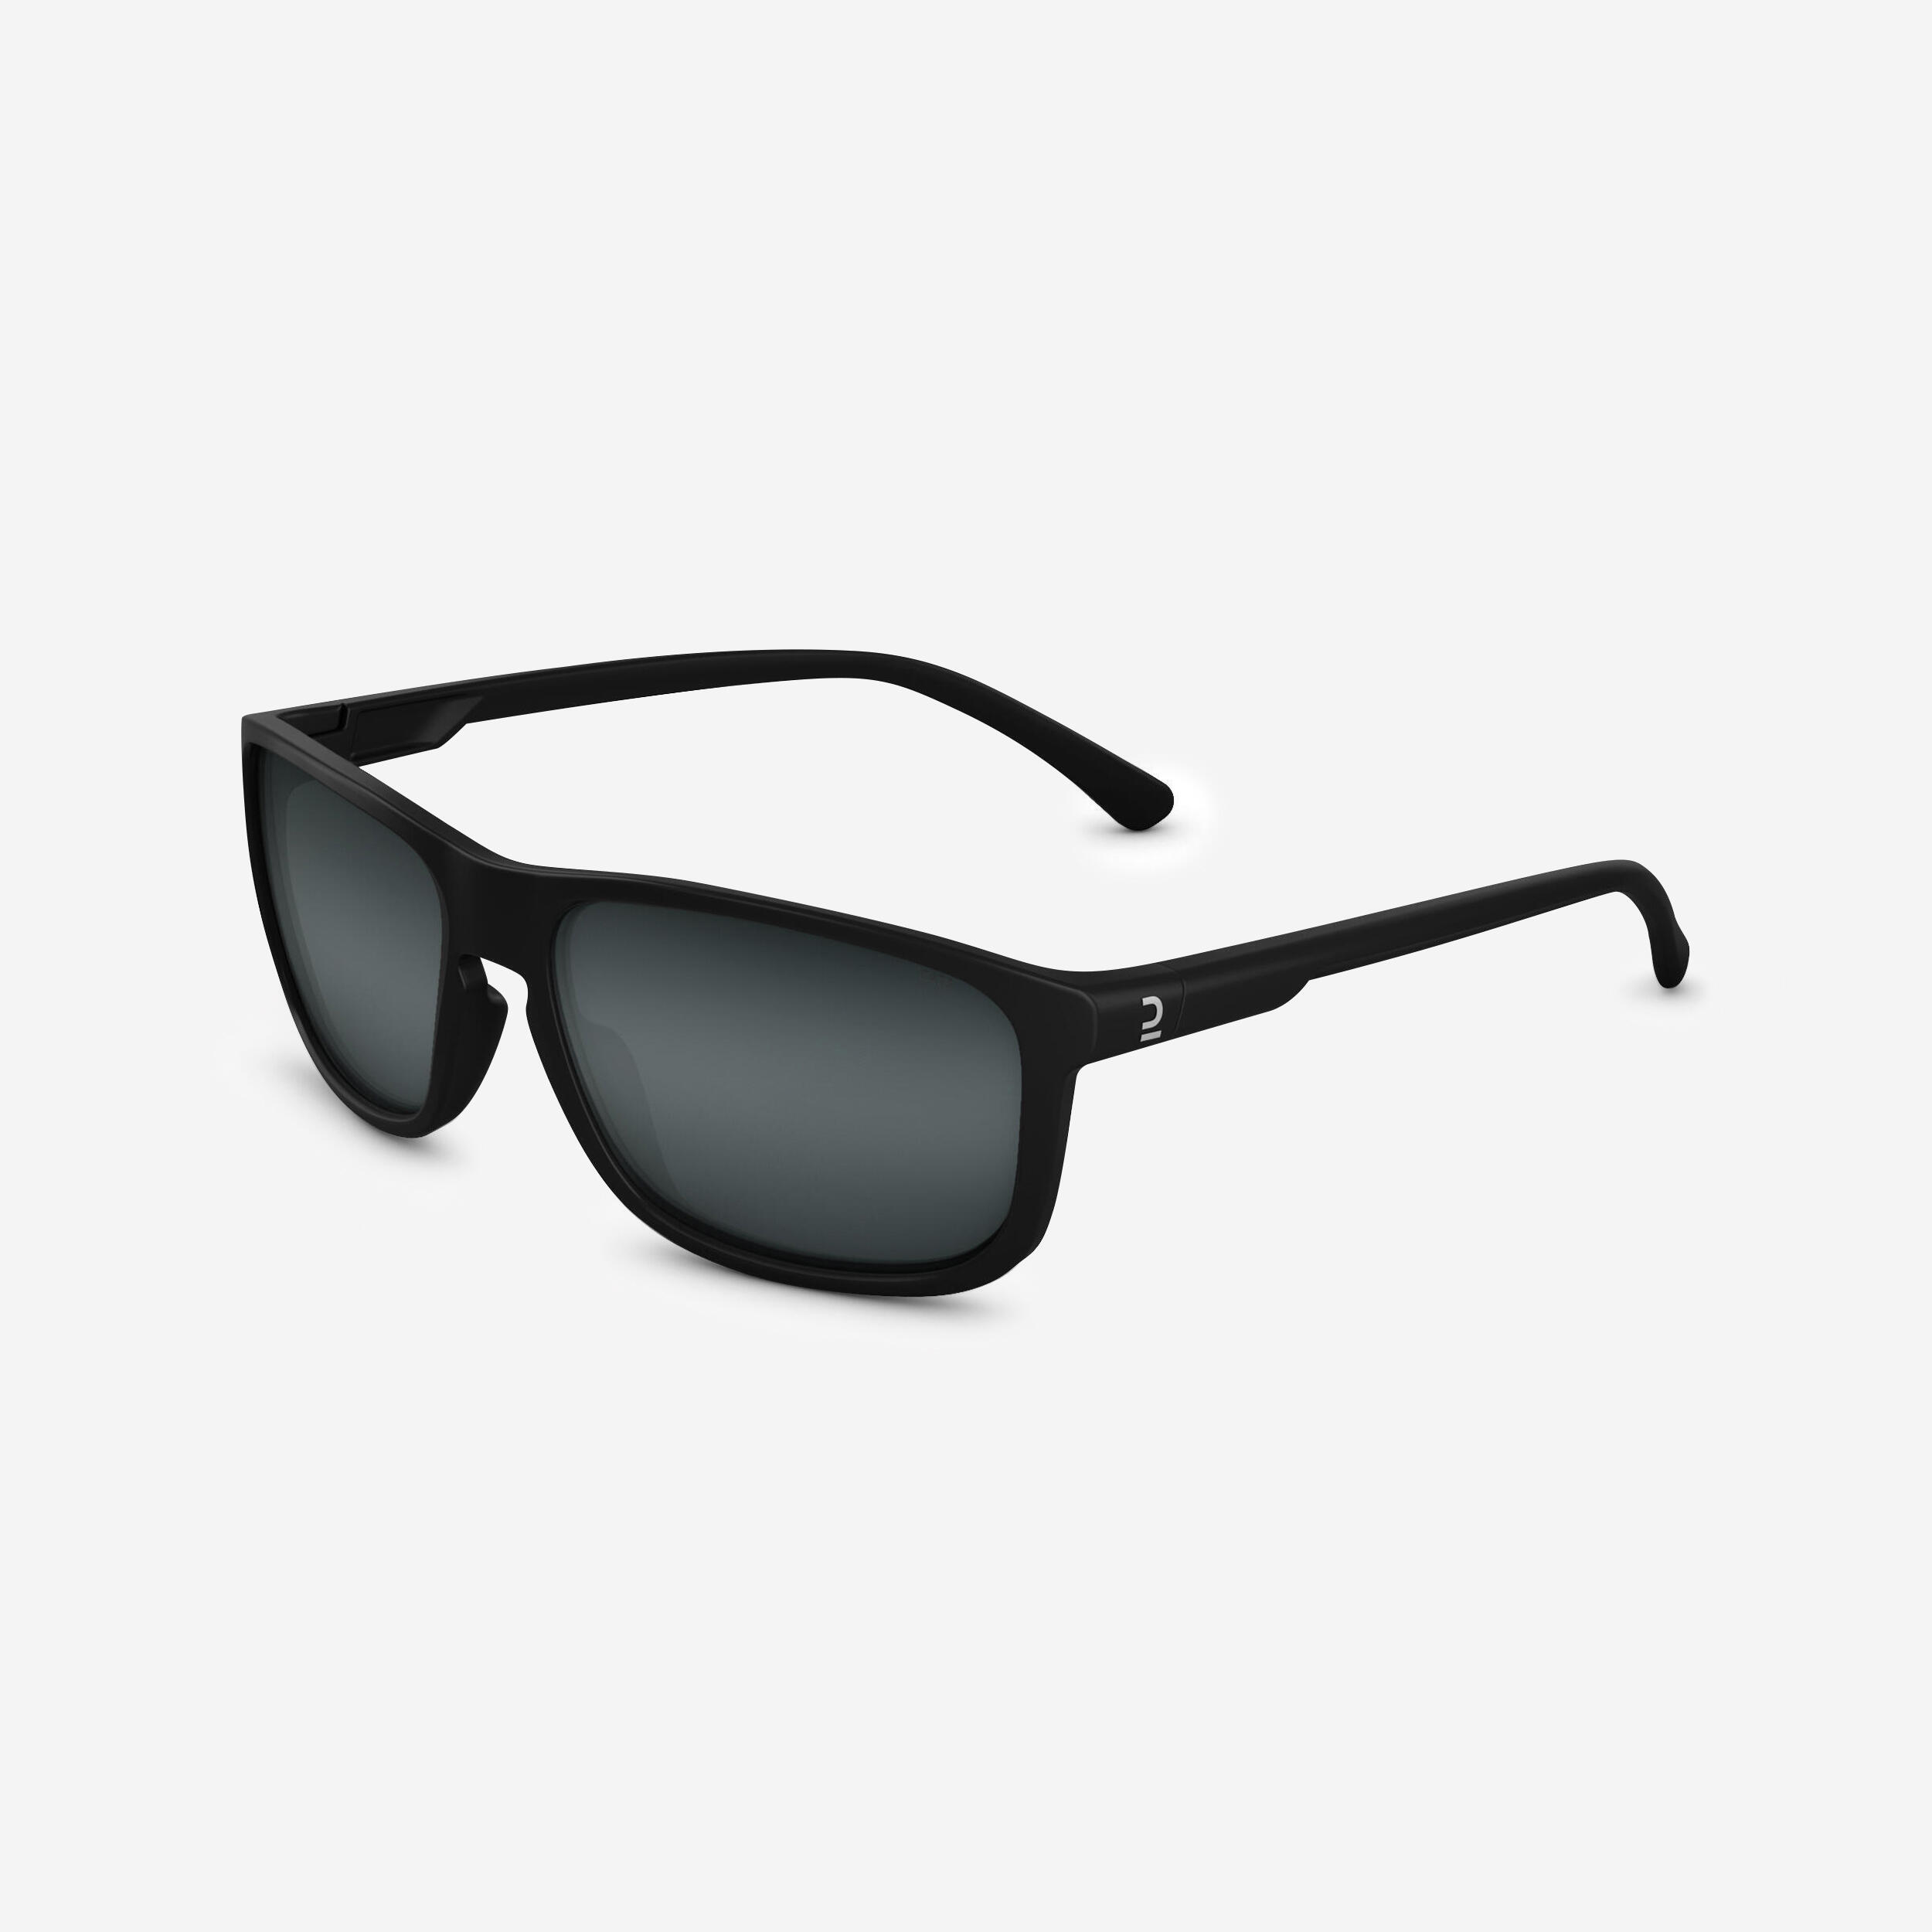 Hiking Sunglasses - MH 500 Black